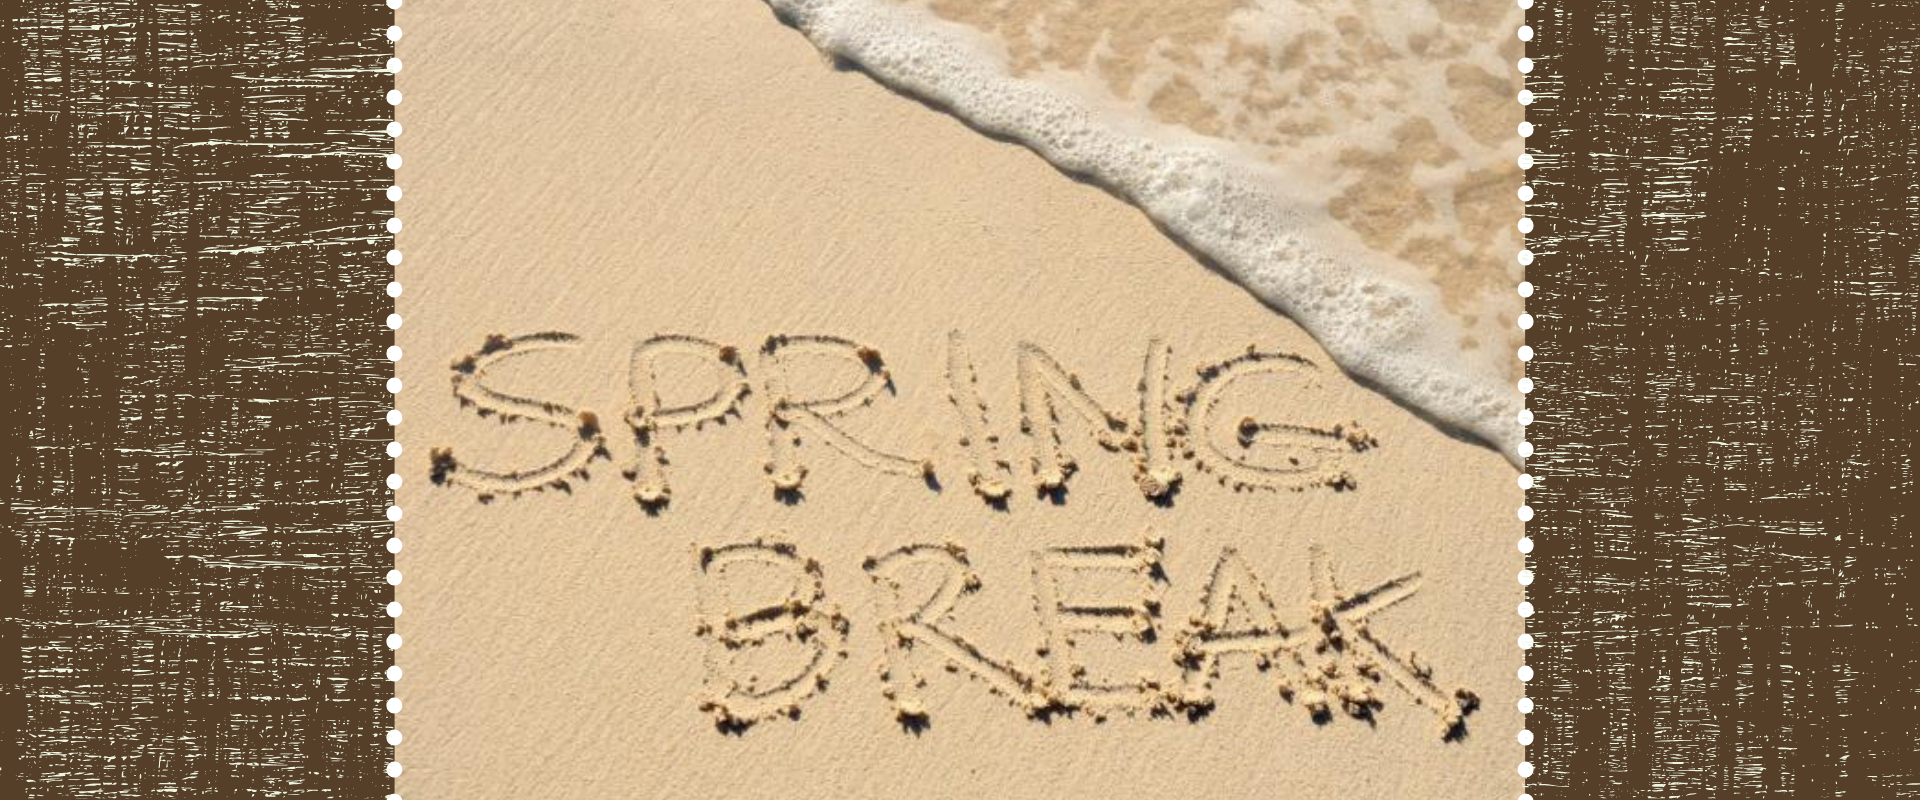 The words "spring break" written in sand